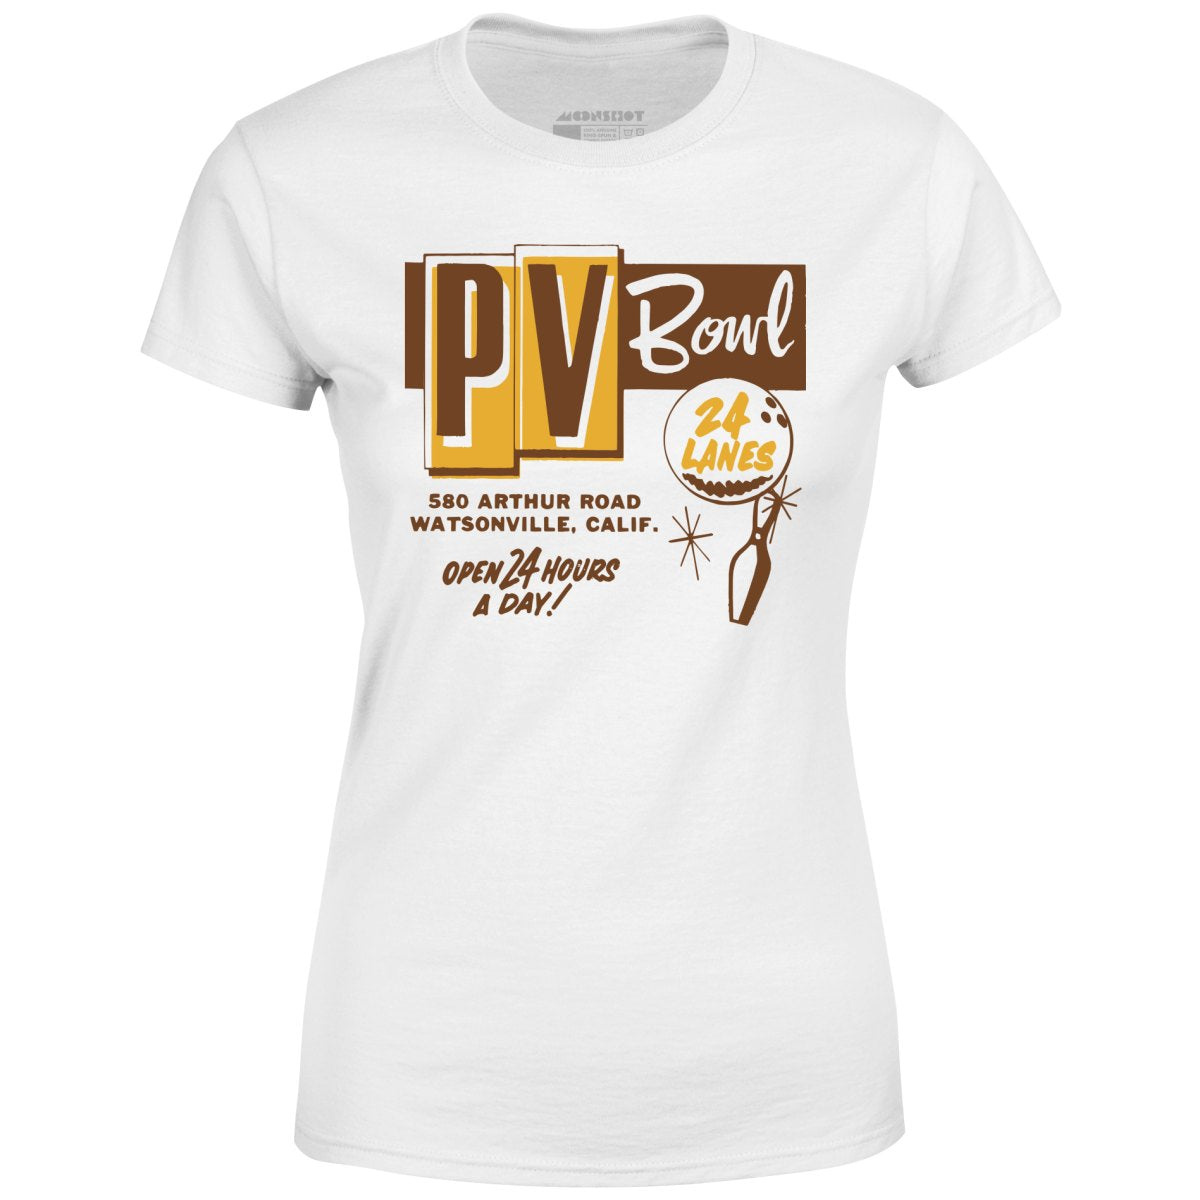 PV Bowl - Watsonville, CA - Vintage Bowling Alley - Women's T-Shirt